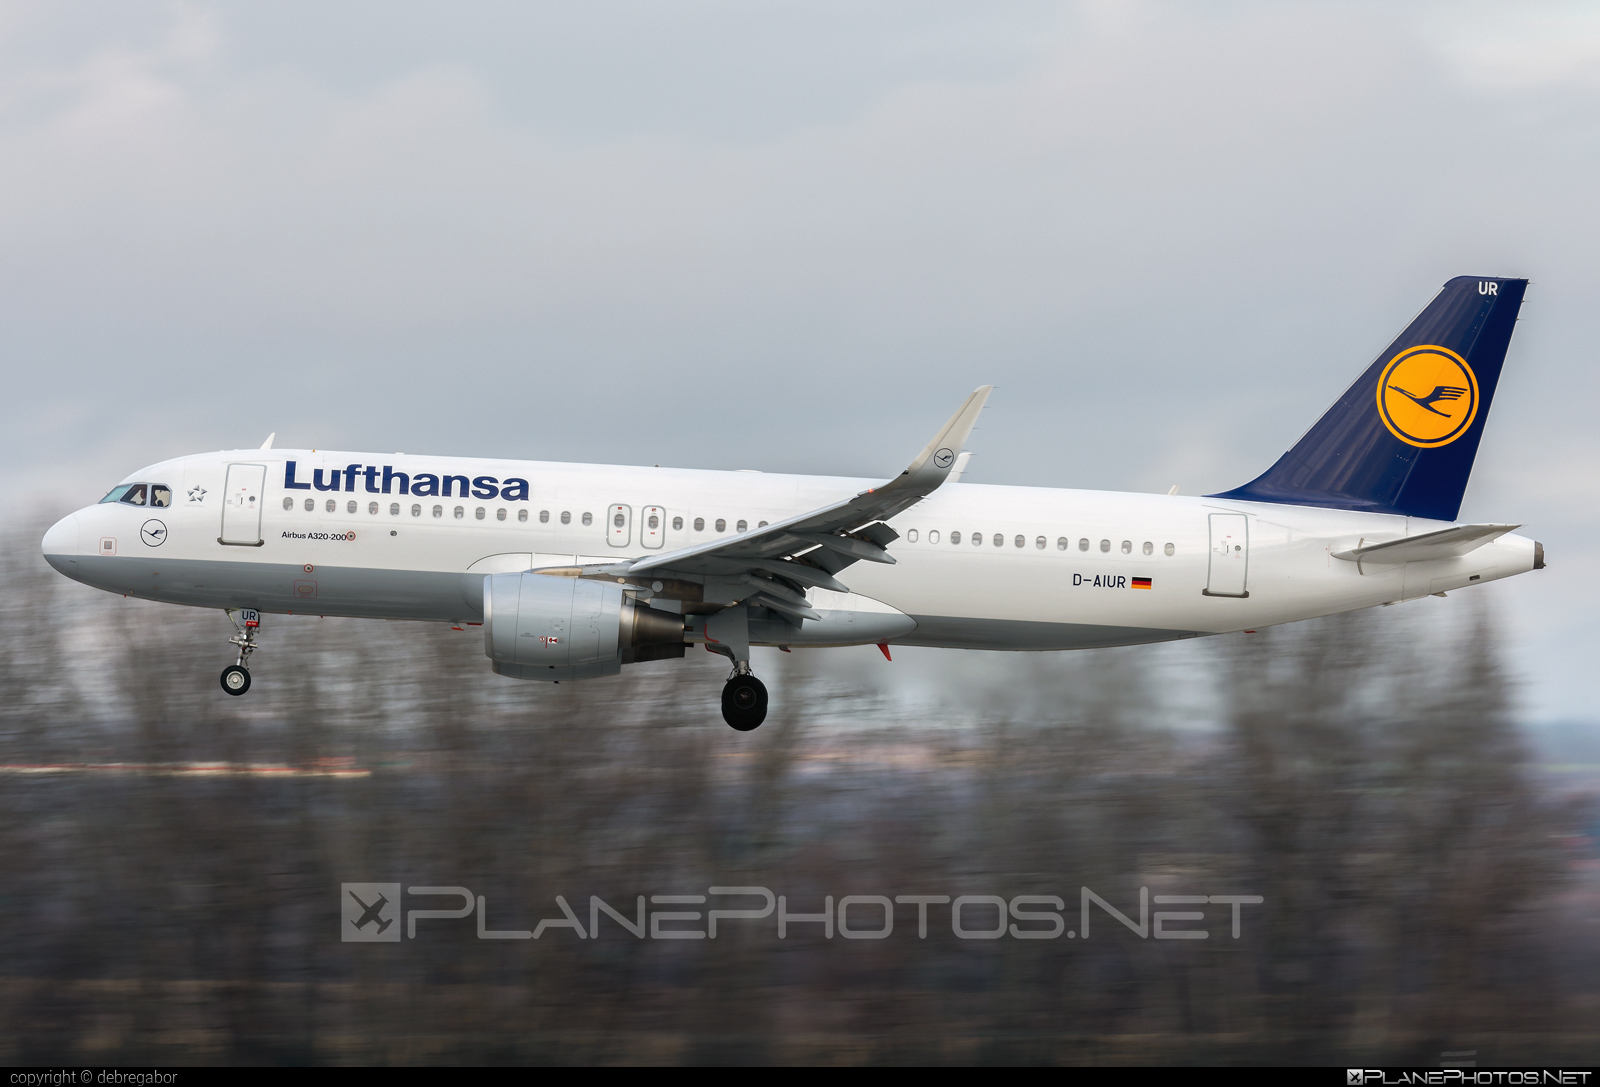 Airbus A320-214 - D-AIUR operated by Lufthansa #a320 #a320family #airbus #airbus320 #lufthansa